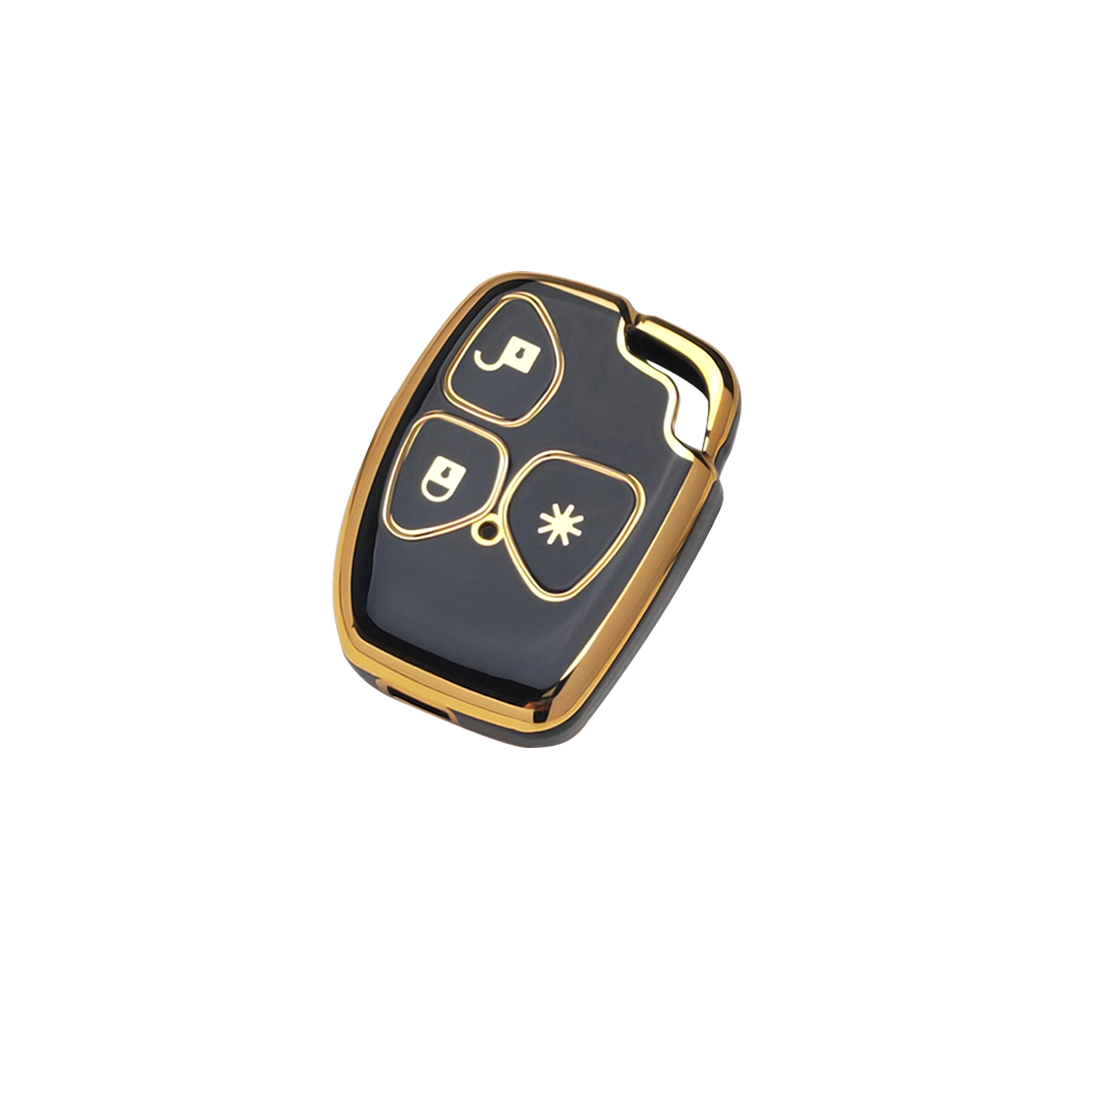 Acto TPU Gold Series Car Key Cover For Mahindra Nuvosports